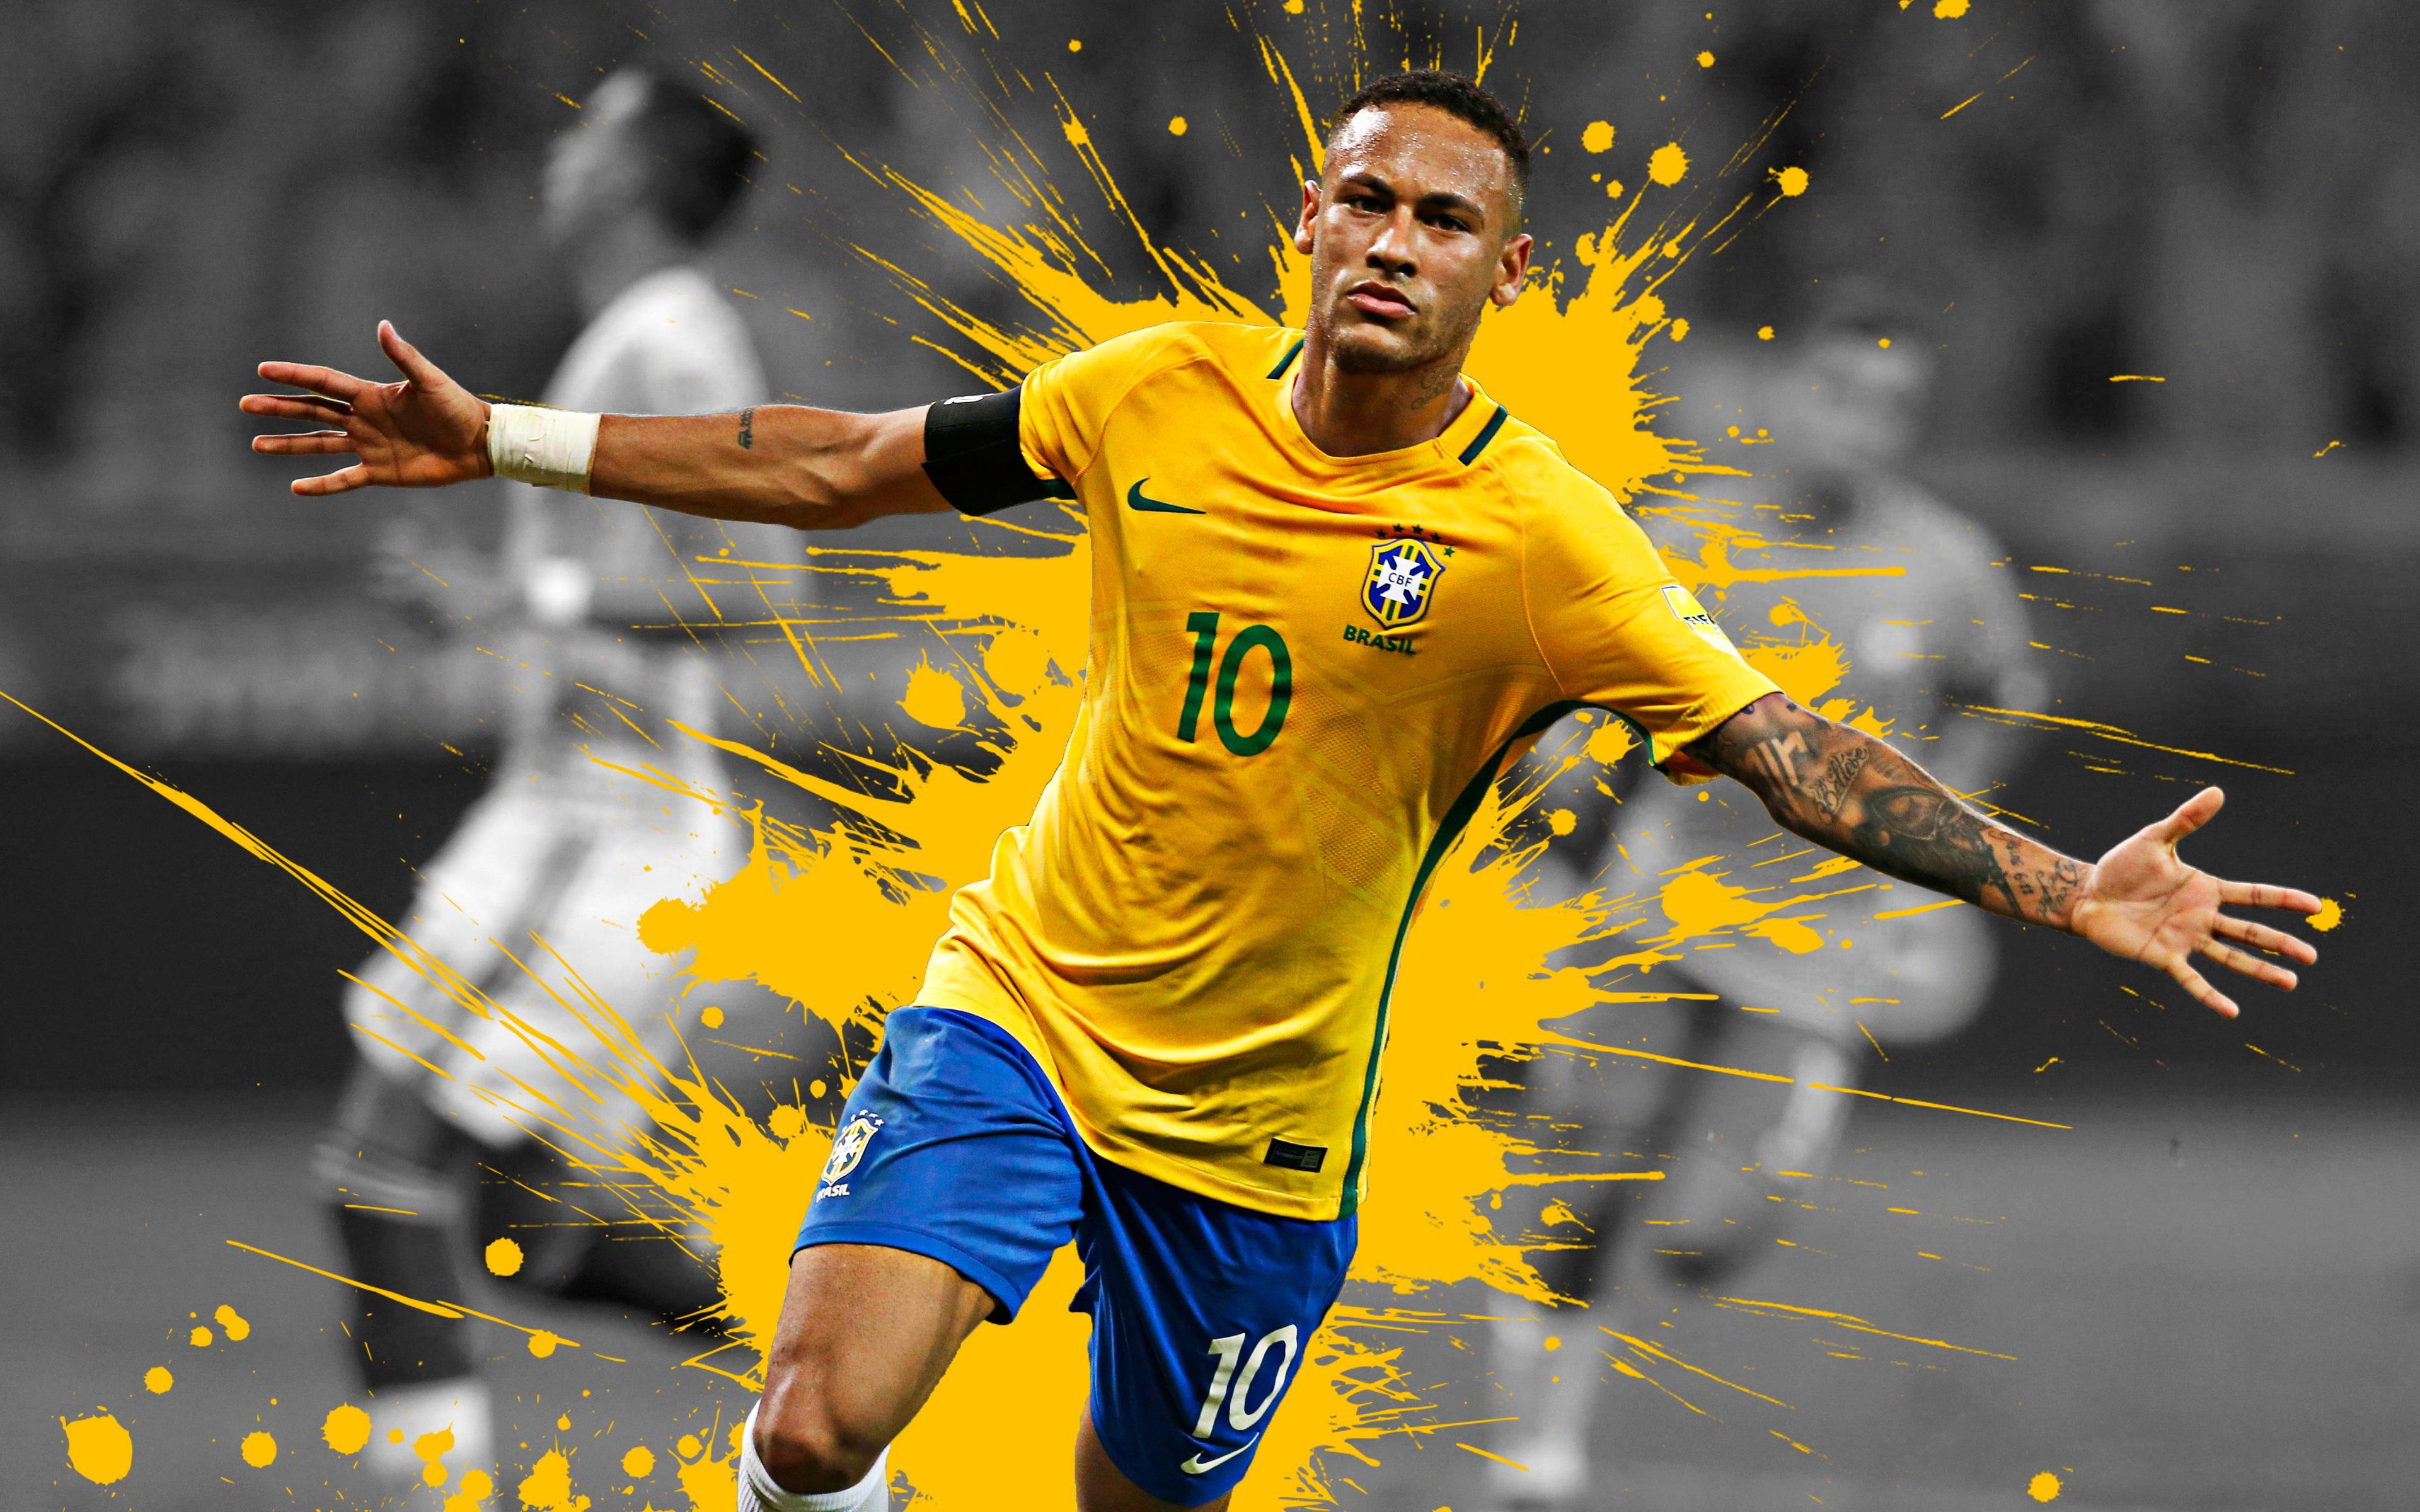 4K Neymar Wallpaper and Background Image